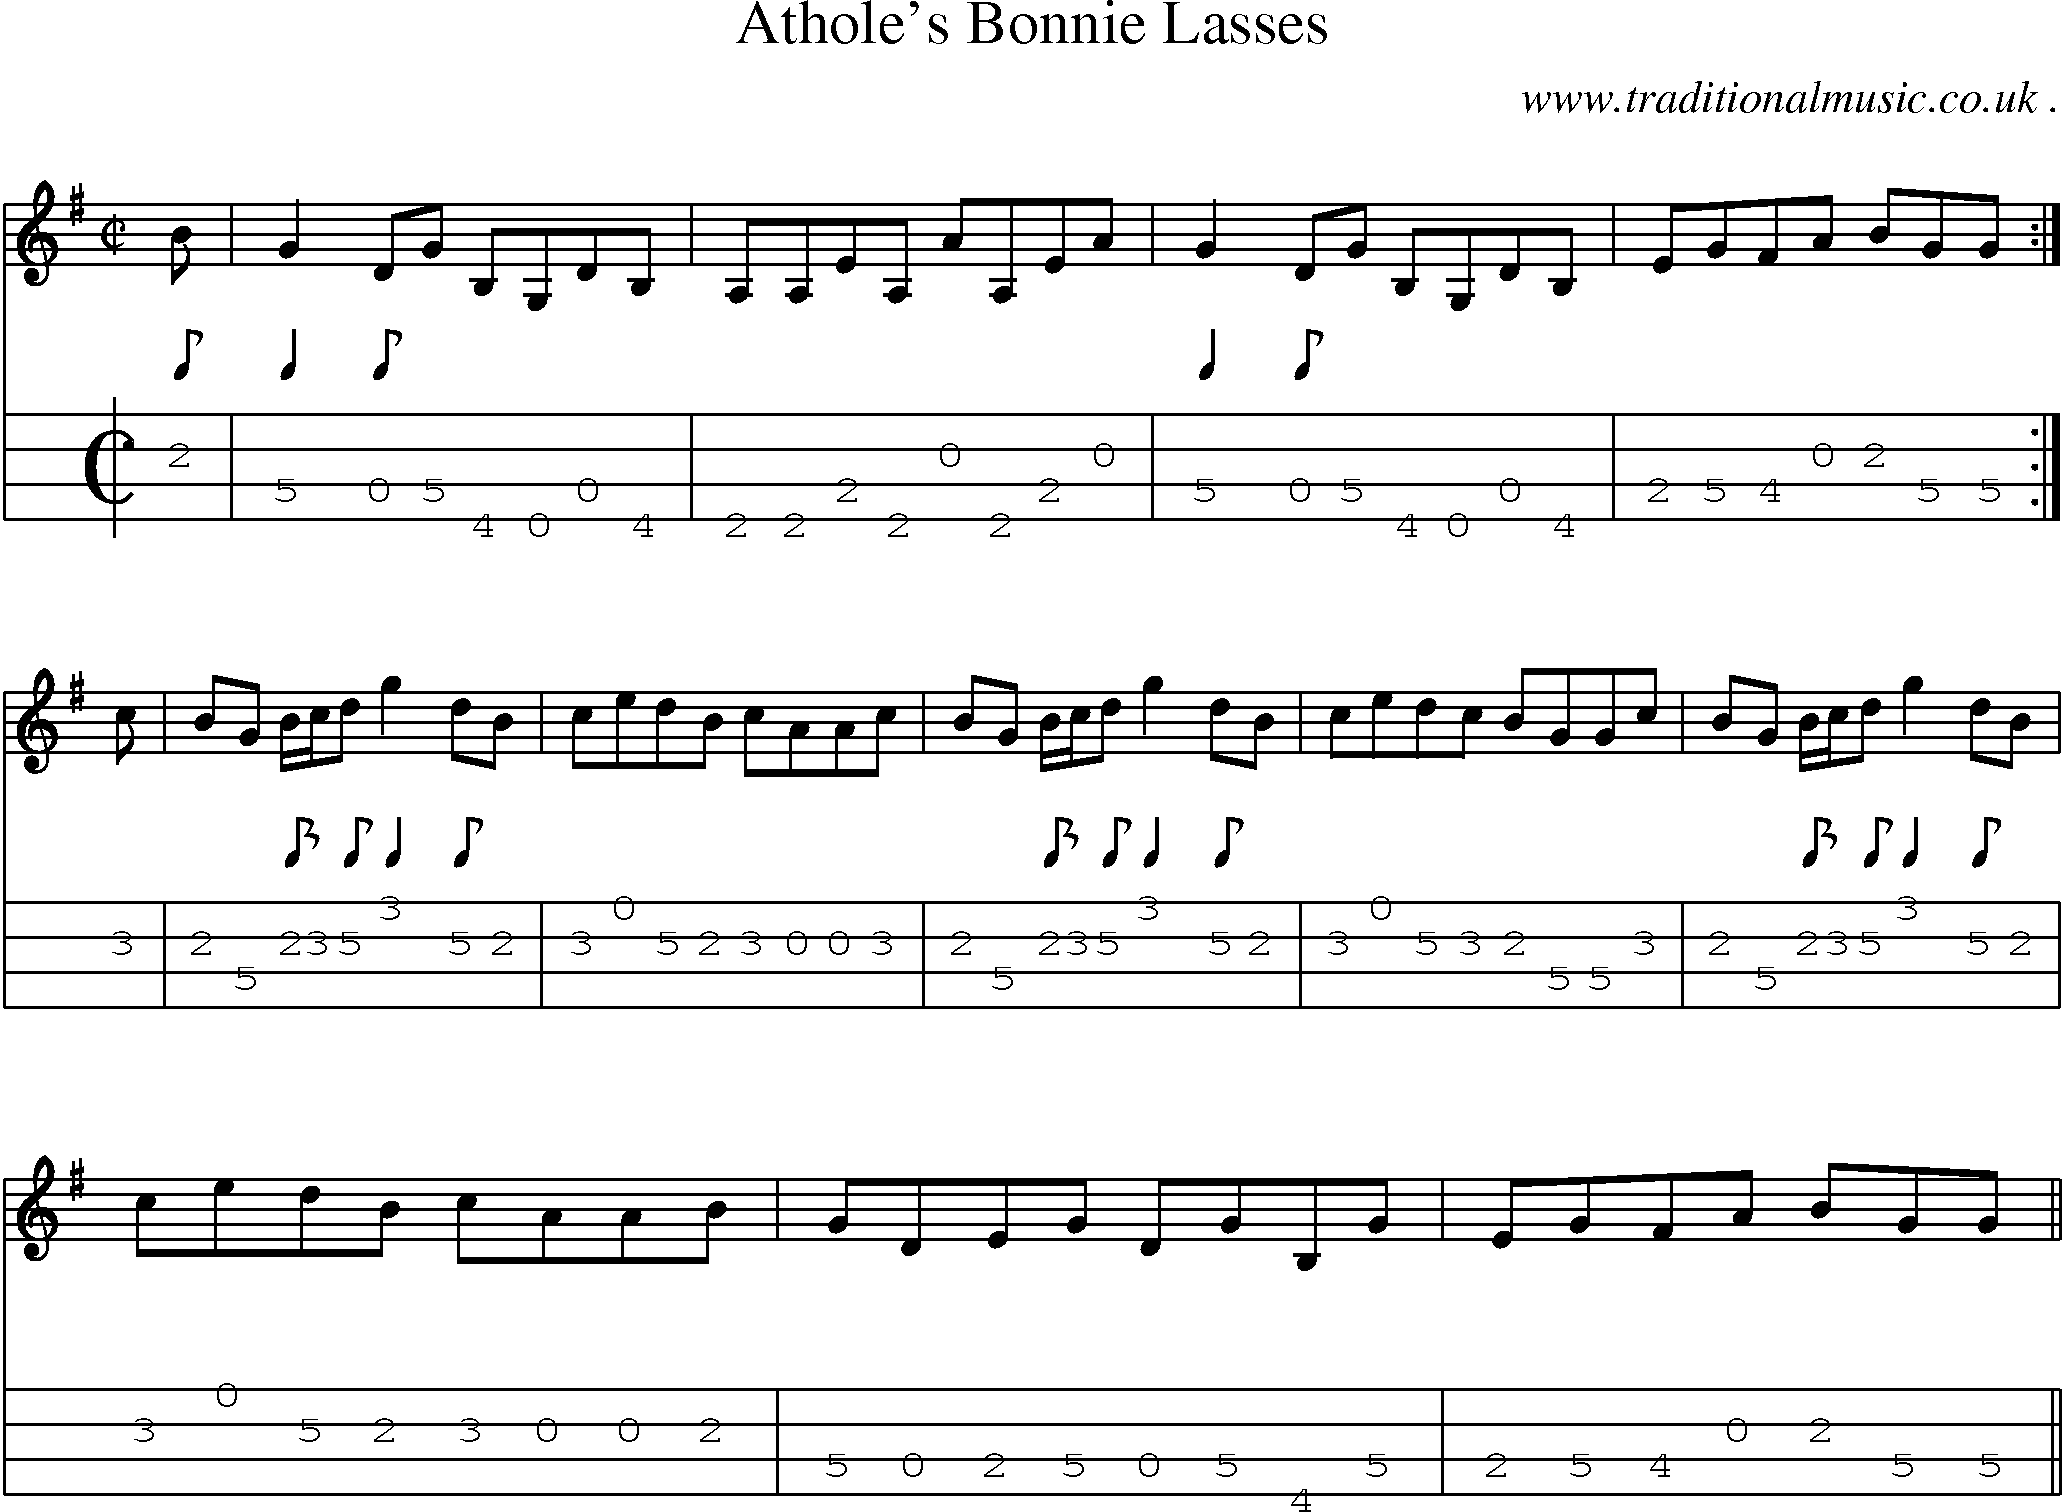 Sheet-music  score, Chords and Mandolin Tabs for Atholes Bonnie Lasses